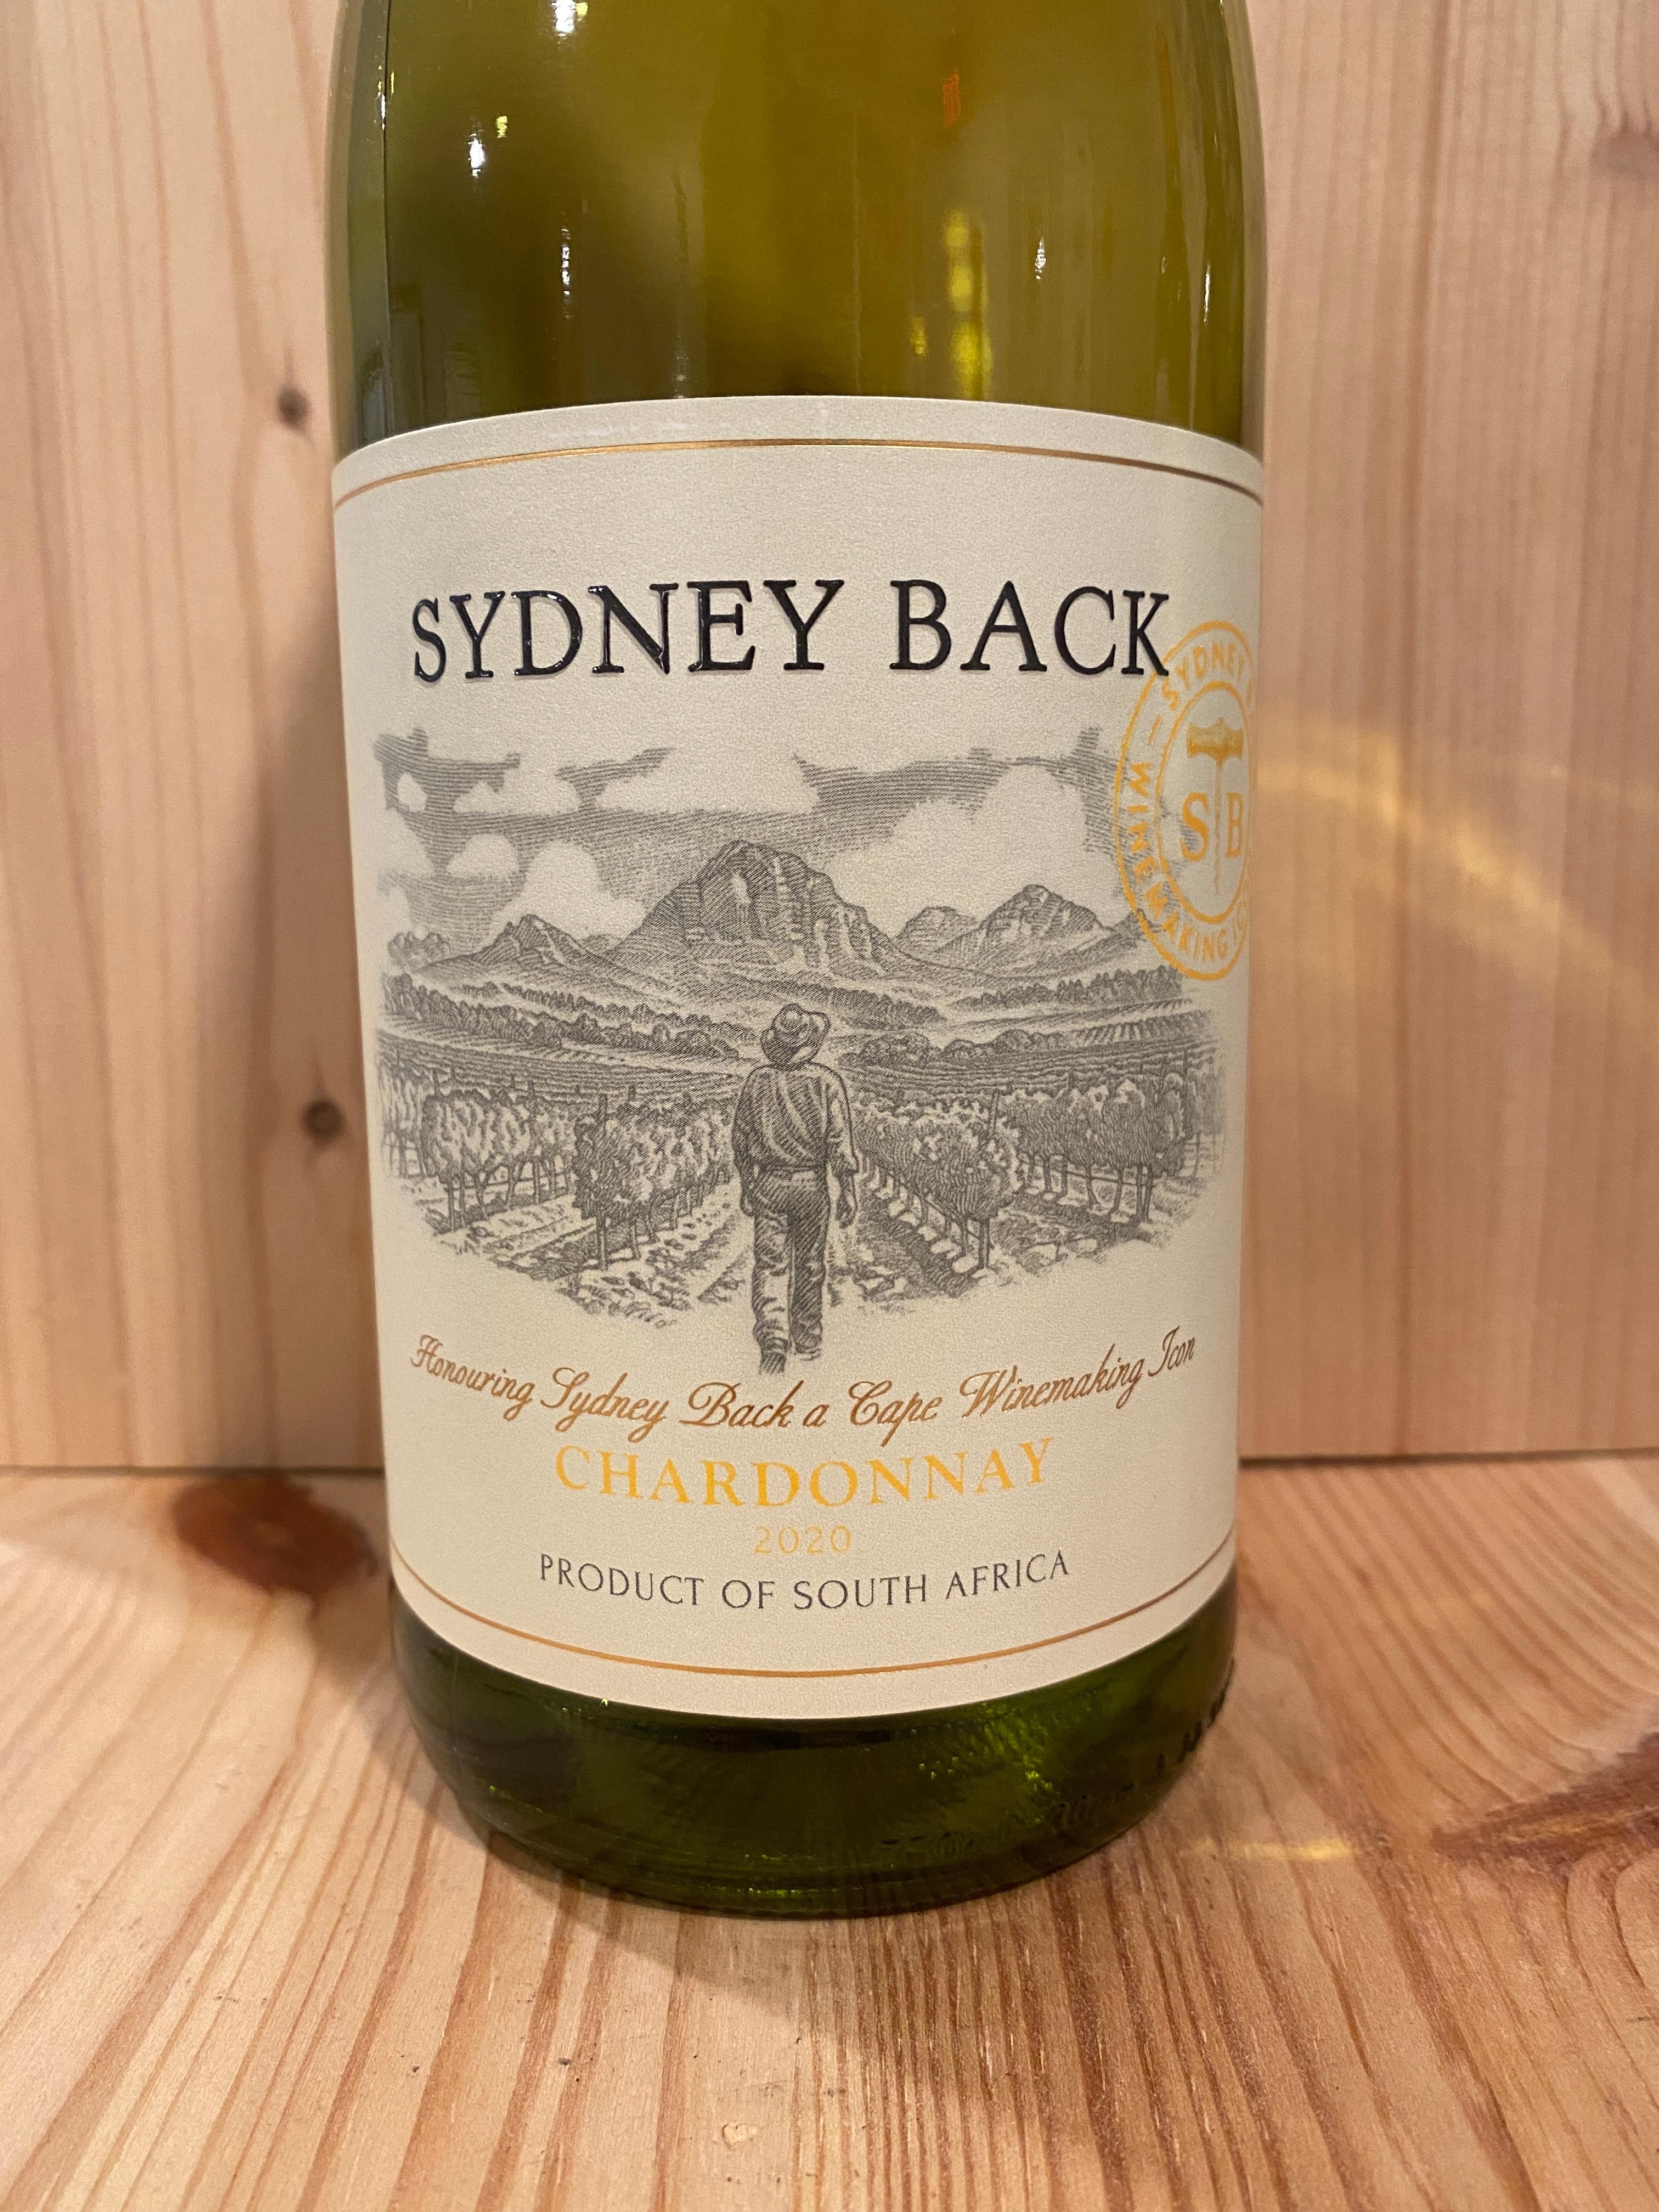 Sydney Back Chardonnay 2020: Paarl, South Africa